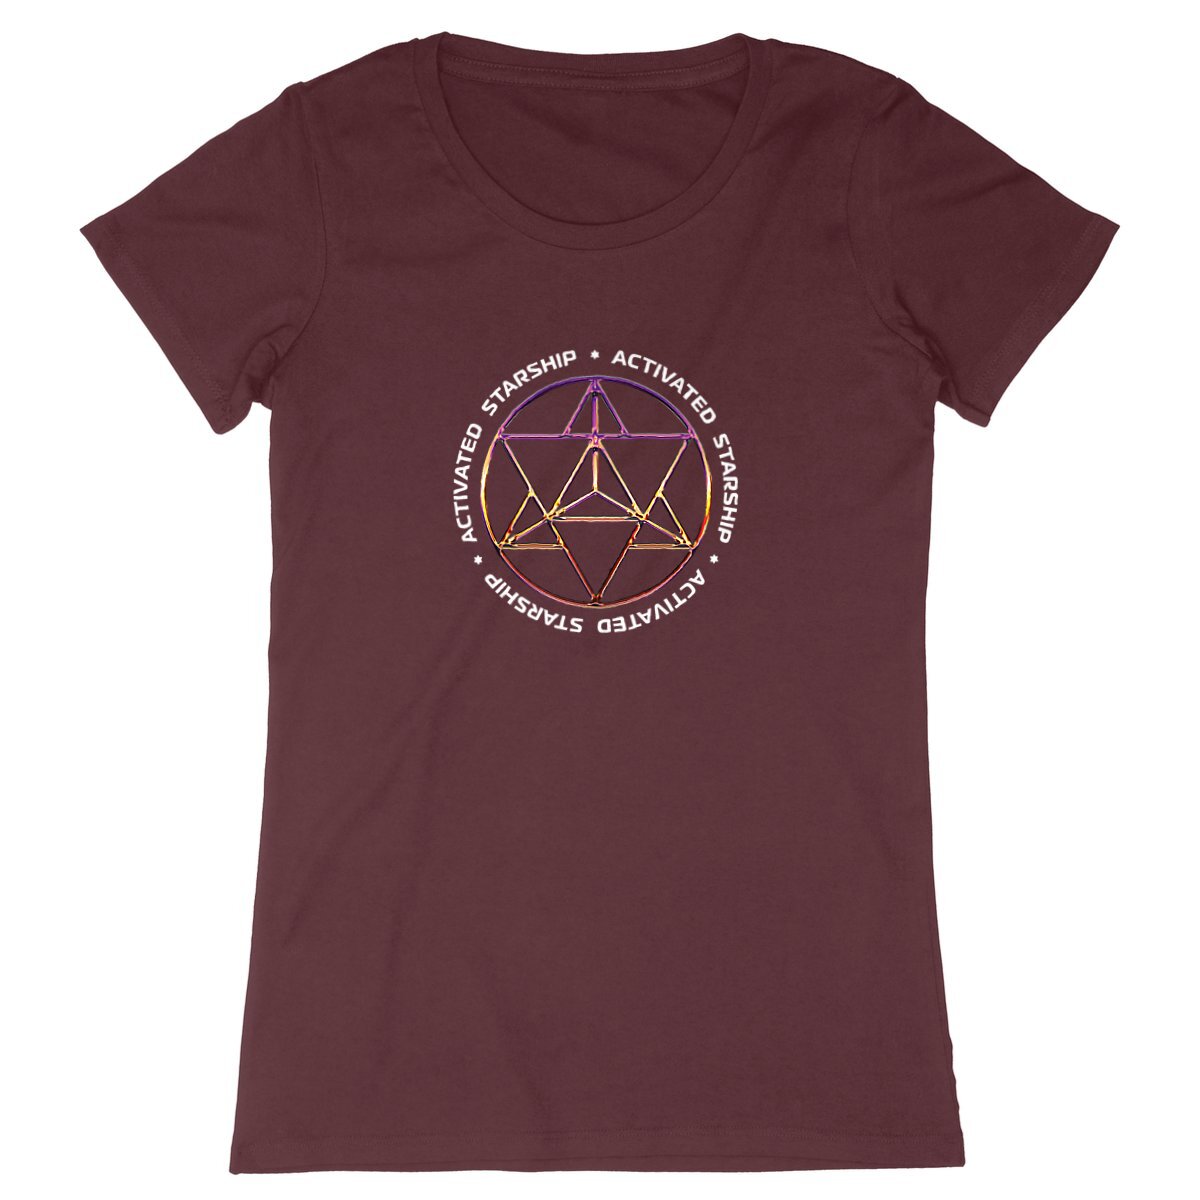 Activated Starship Organic Cotton Women T Shirt